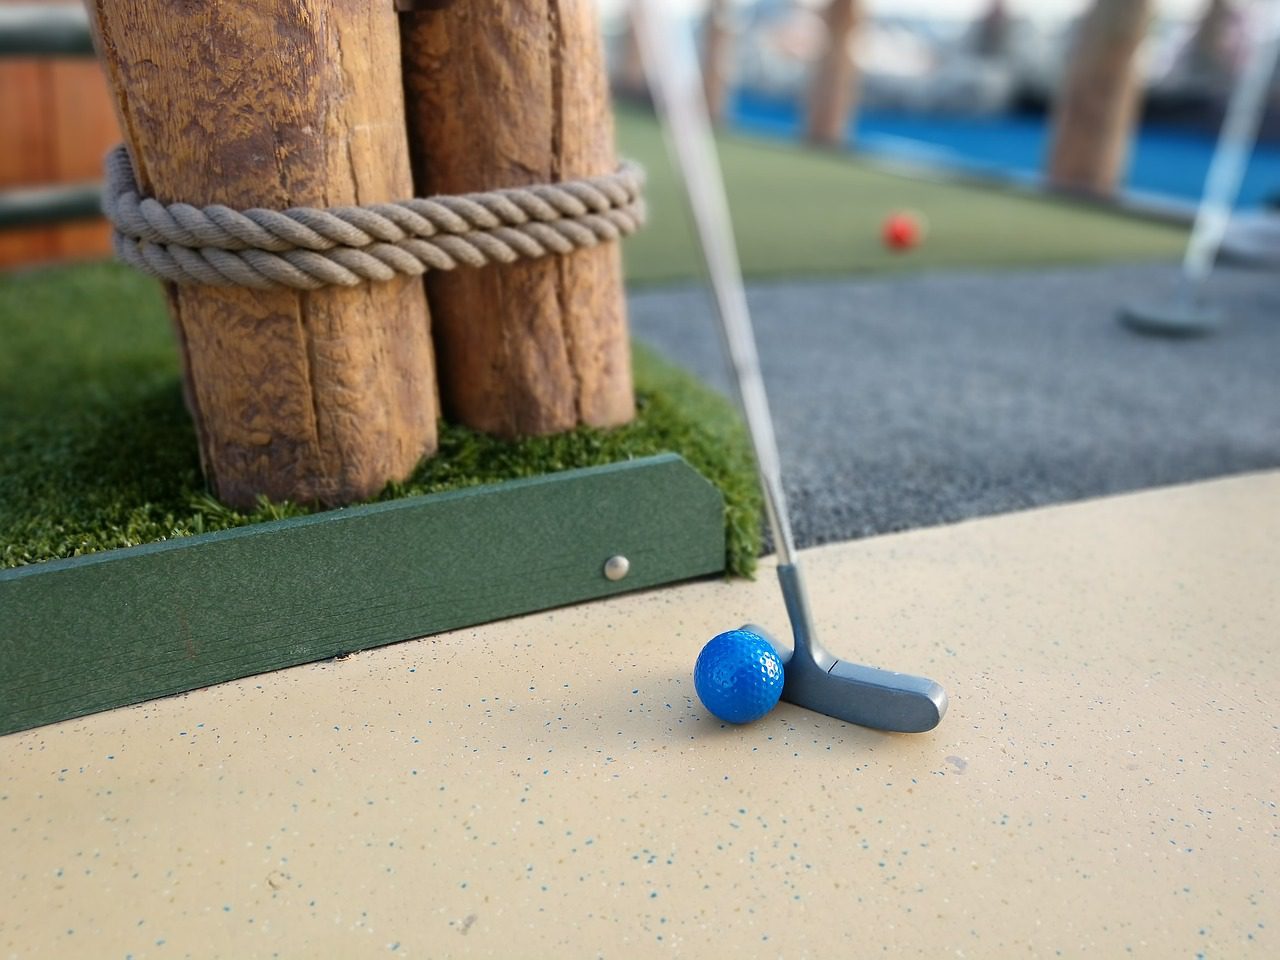 Golf N’Stuff – Mini Golf, Go Carts, Batting Cages, etc.